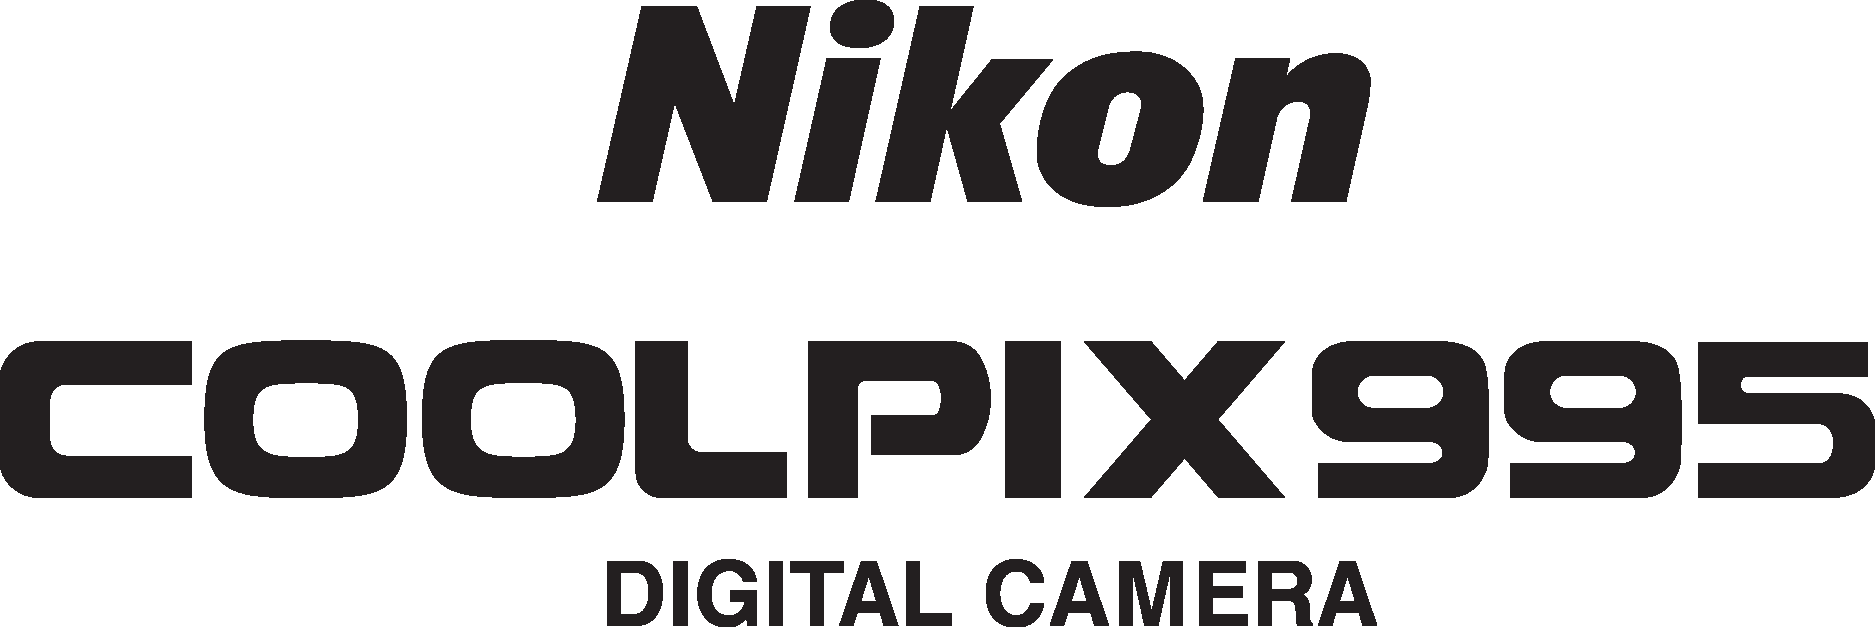 Nikon D7500 Pictures | Download Free Images on Unsplash